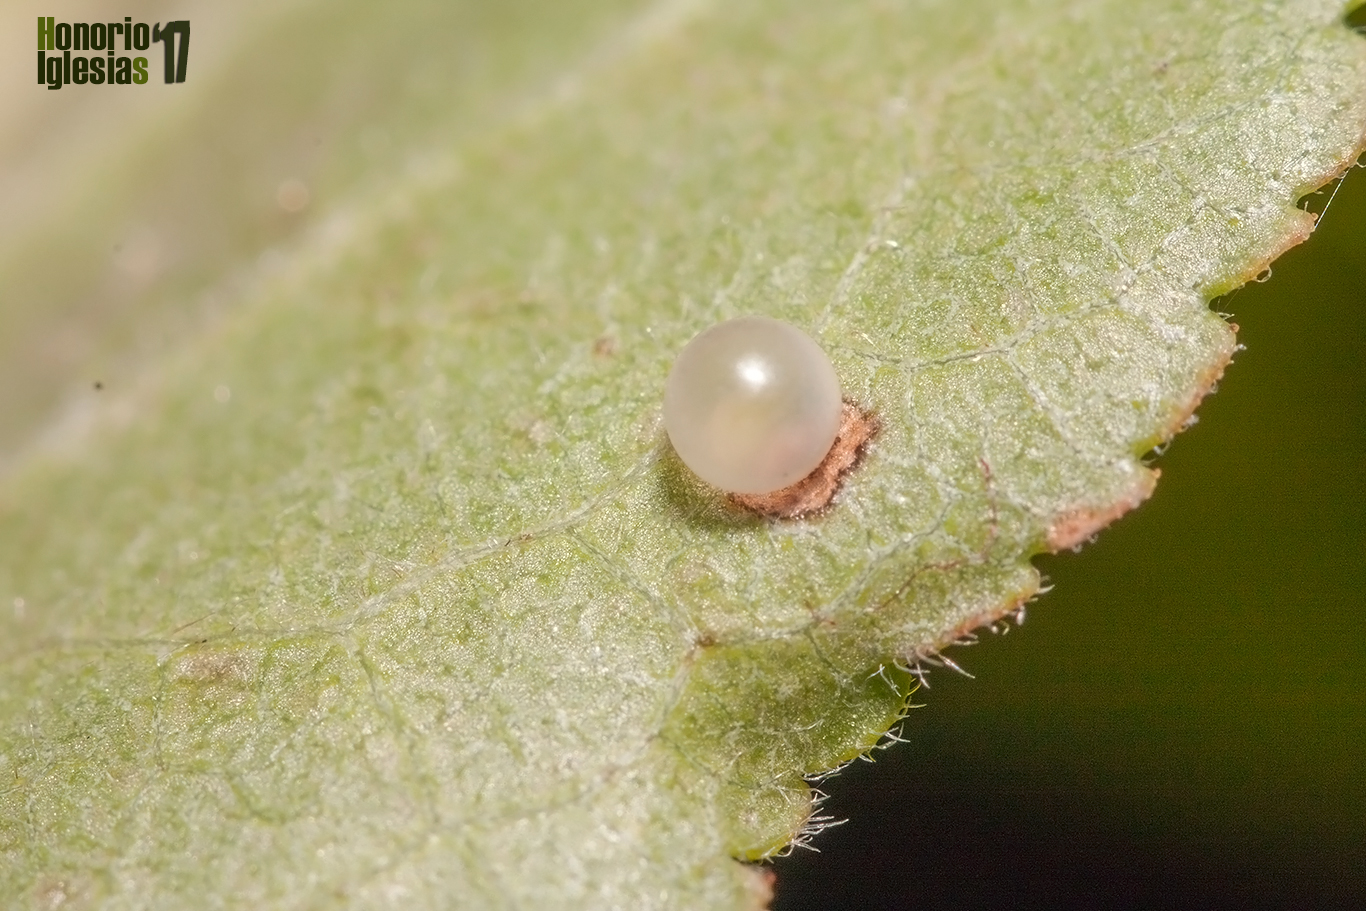 Huevo de mariposa chupaleches o chupaleche (Iphiclides feisthamelii) depositado sobre hoja de ciruelo común (Prunus domestica), una de sus plantas nutricias.